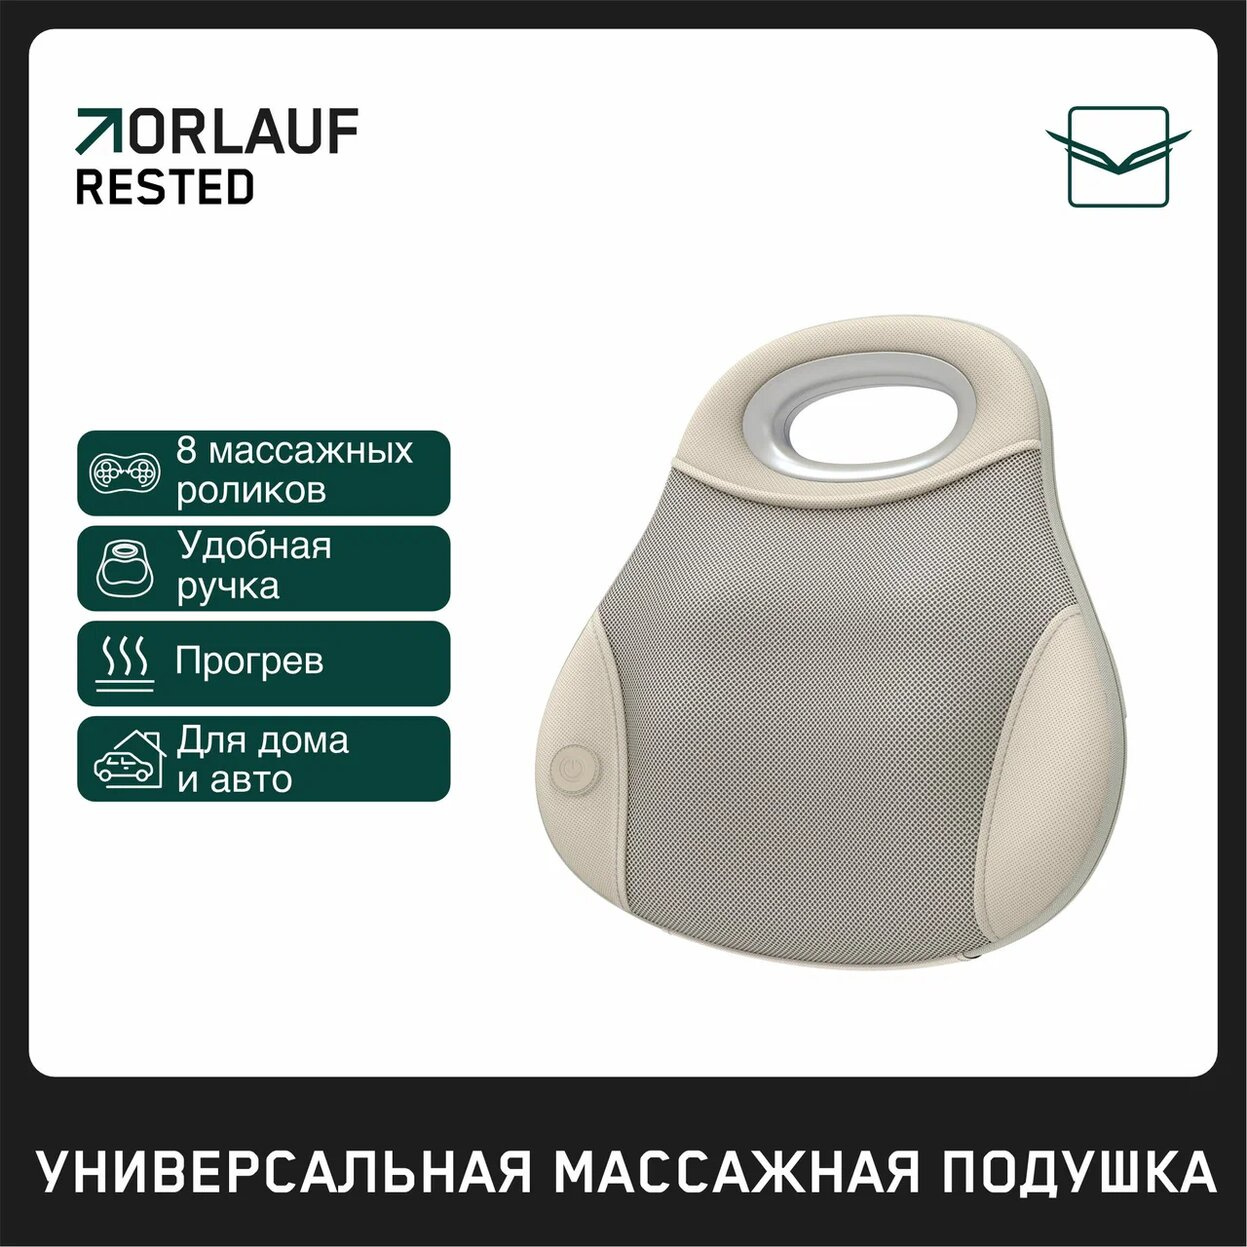 Orlauf Rested из каталога устройств для массажа в Омске по цене 11900 ₽